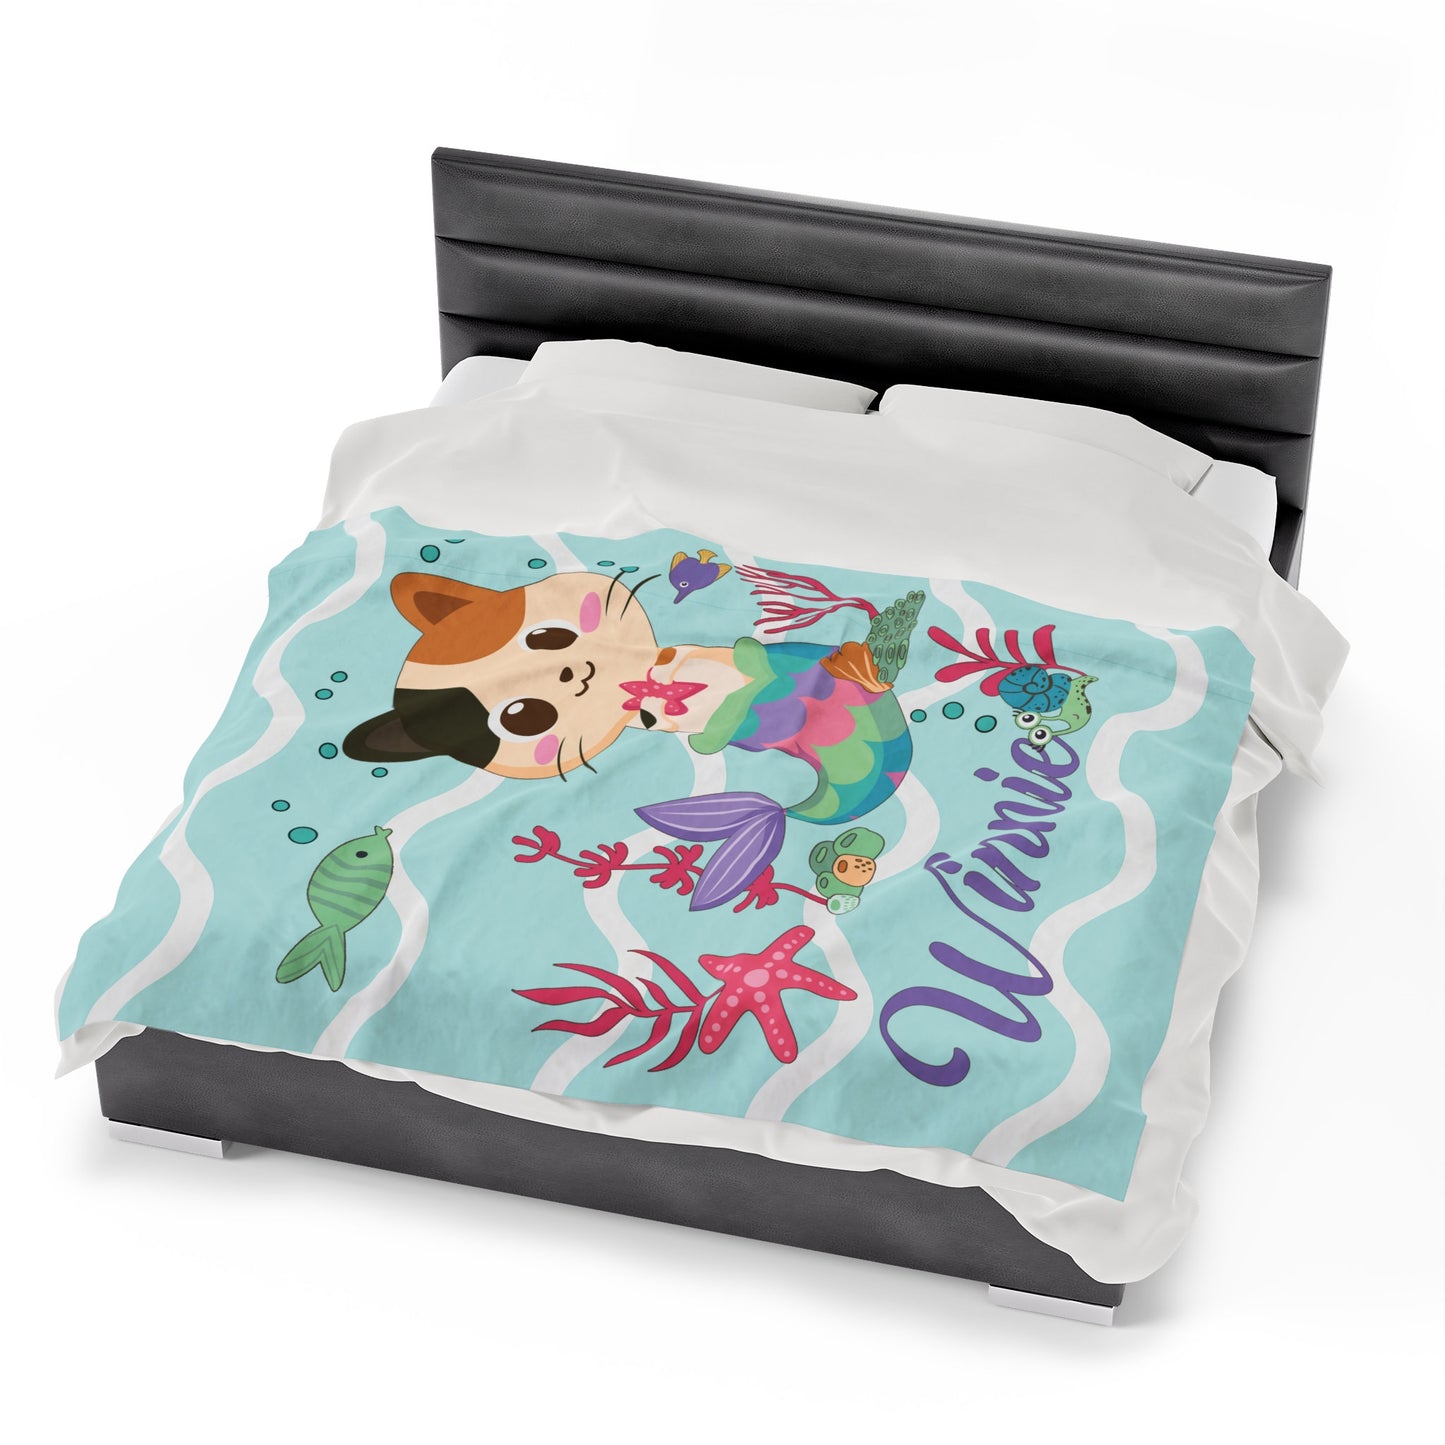 Personalized Meowmaid Blanket, Cat Mermaid Tail Plush Velveteen Throw Blanket, Comfy Blanket, Soft Stroller Blanket, Kid Name Blanket Girl